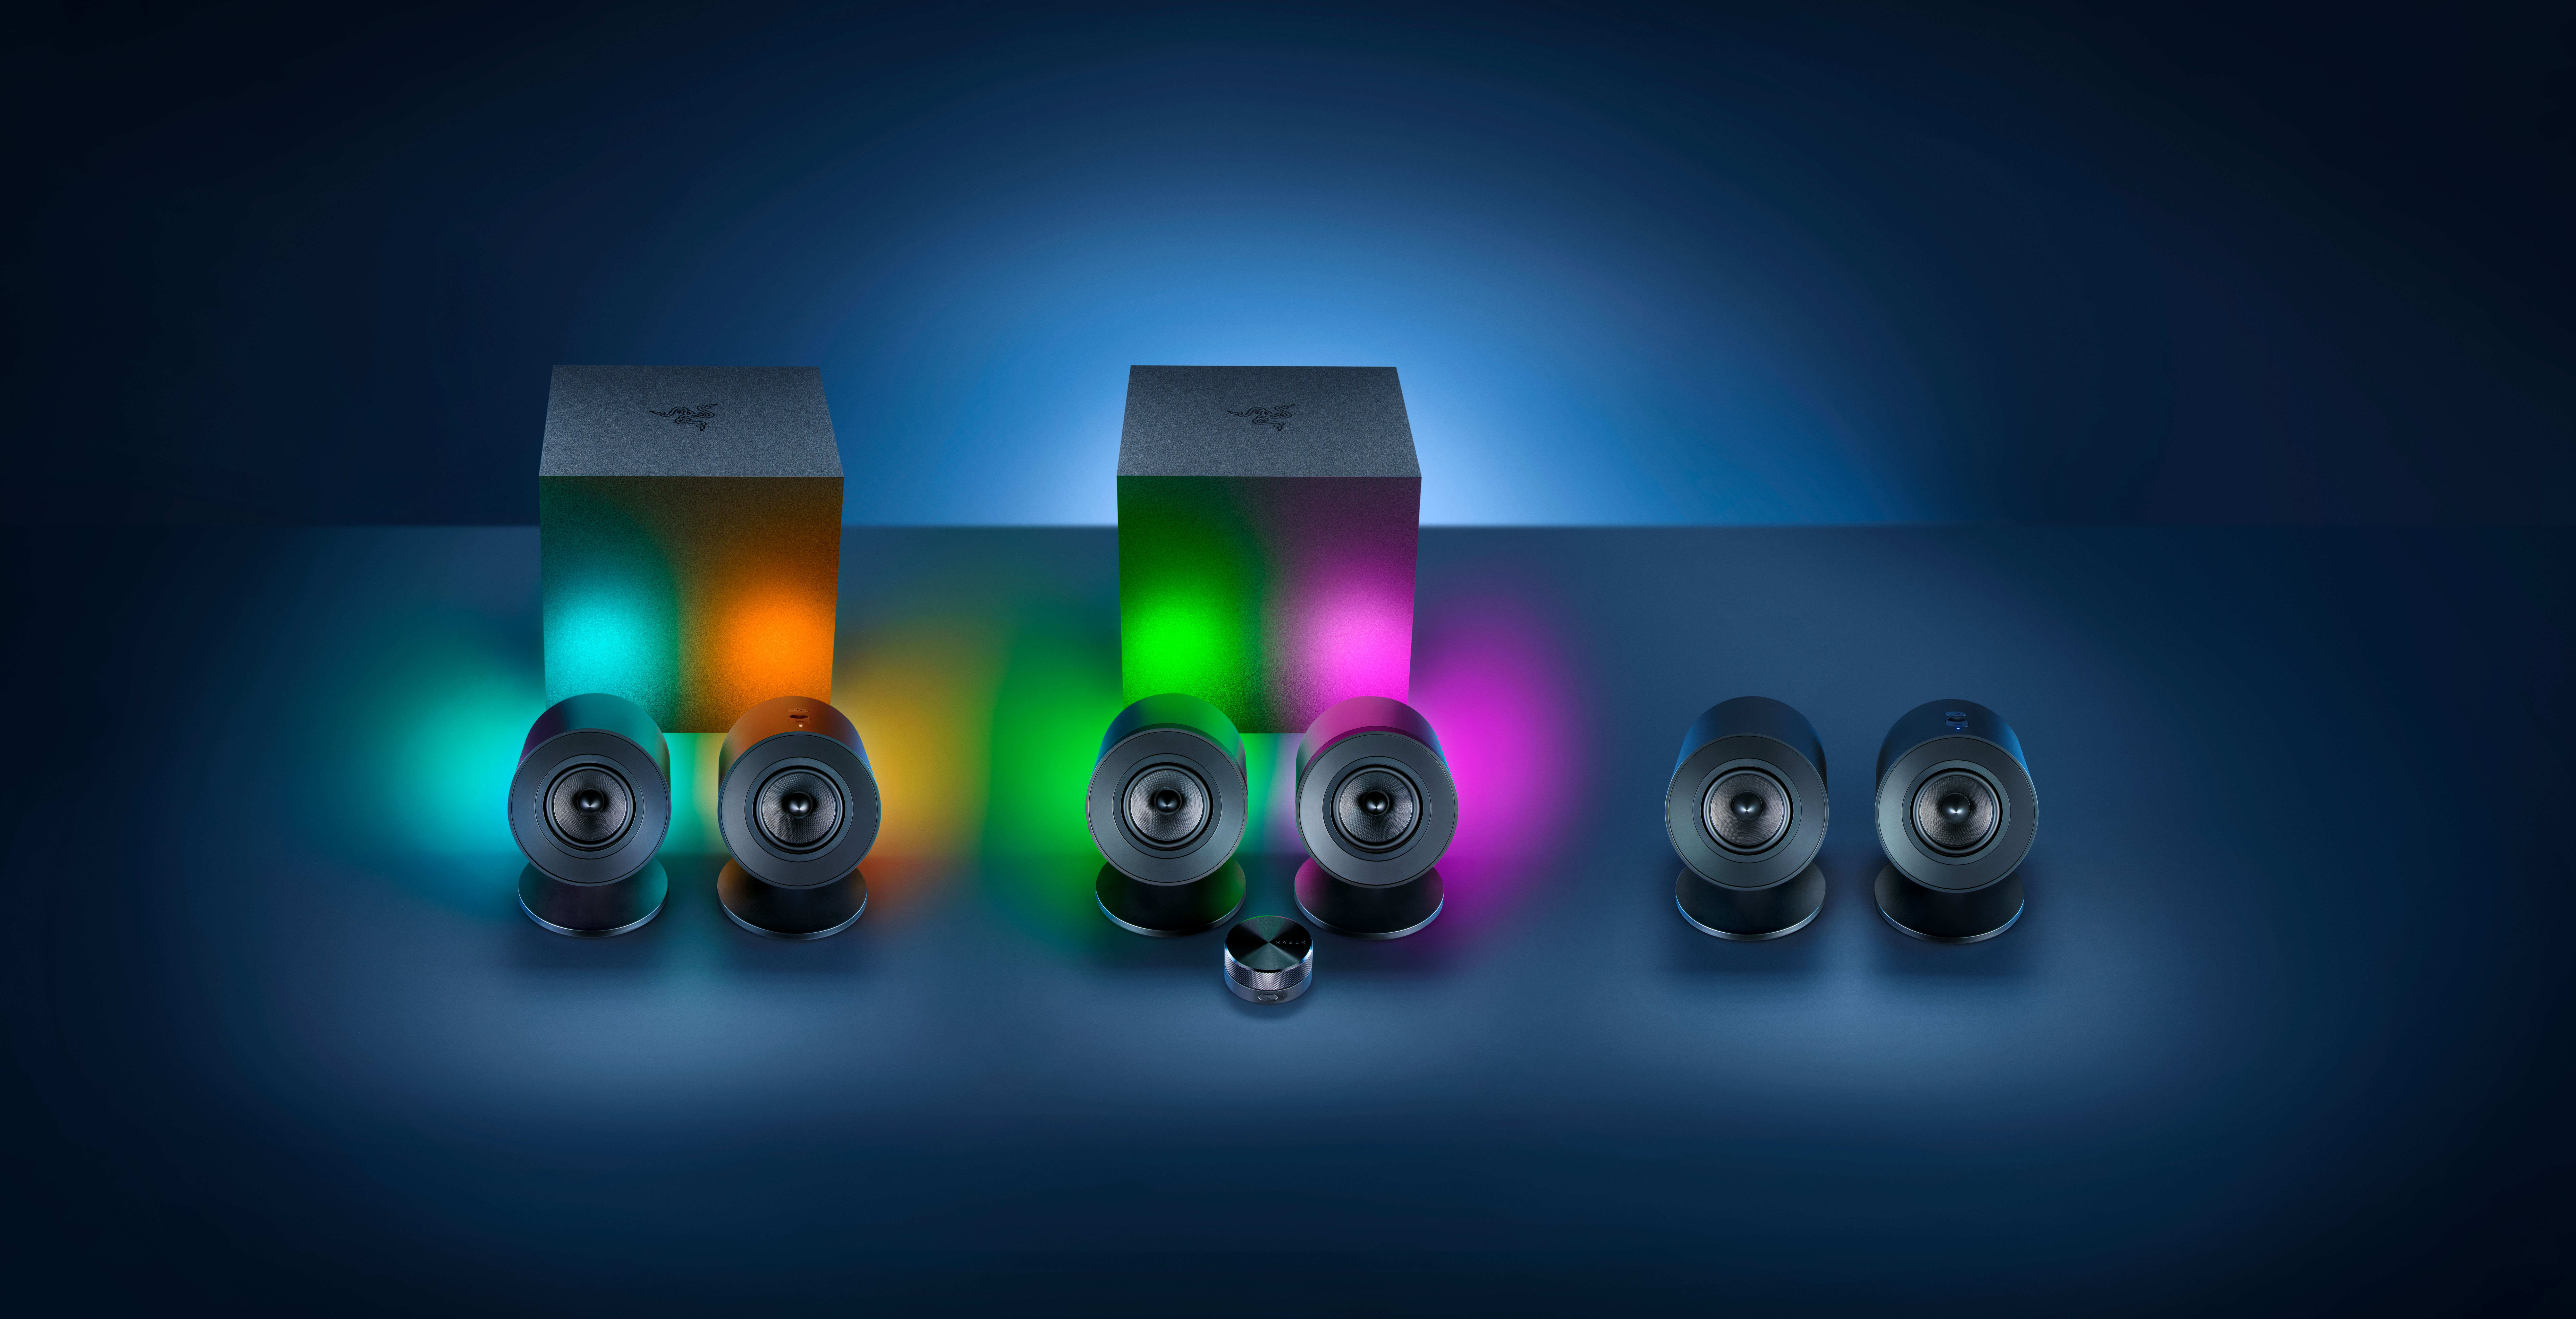 ＜Razer＞ 音と光で空間を彩り、エンターテイメントの質を
ワンランク上げるゲーミングスピーカー
「Razer Nommo V2 Pro」他、3製品を5月19日(金)に予約開始